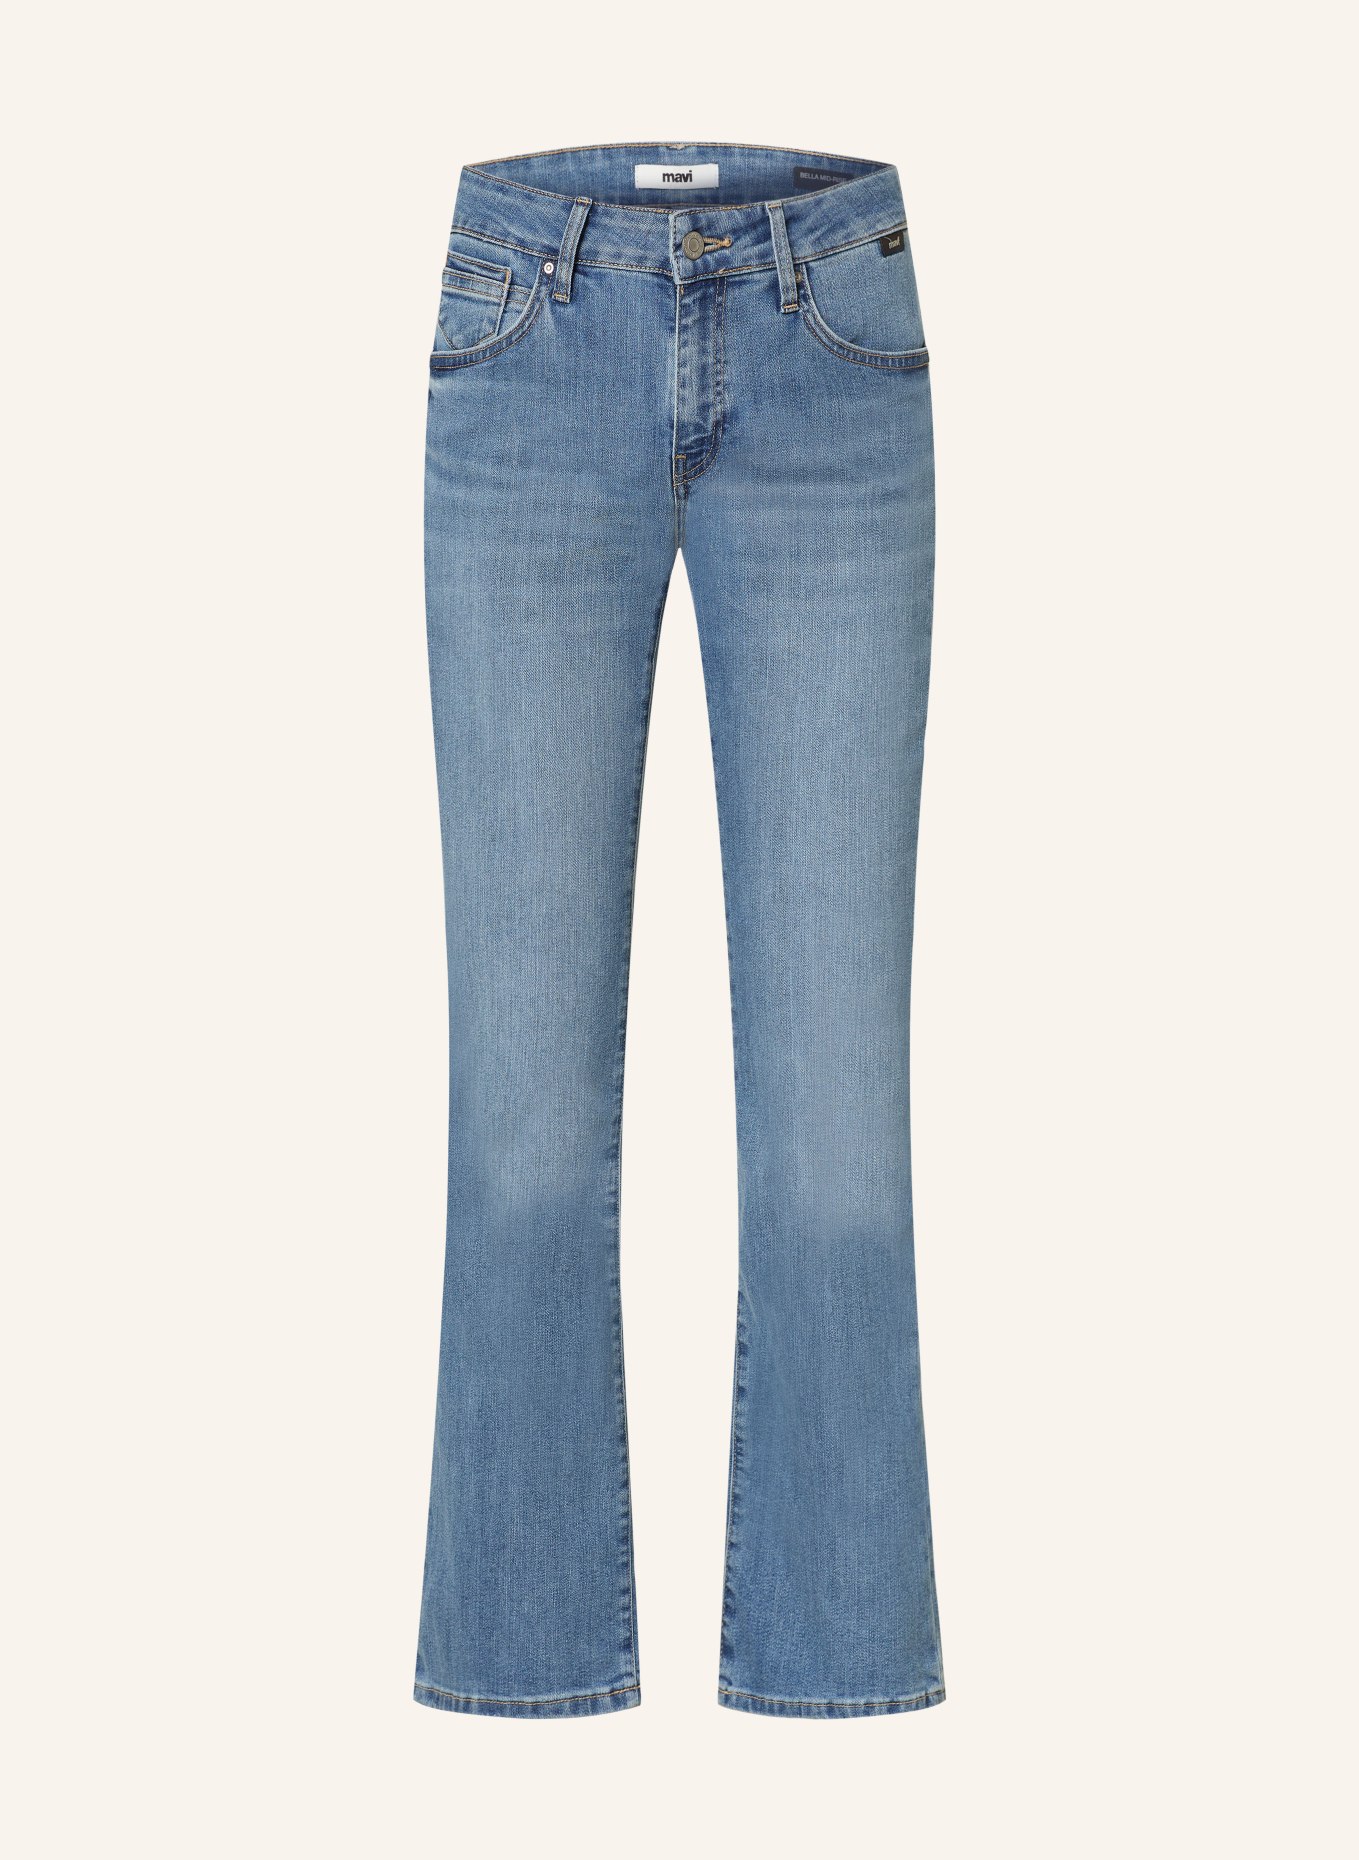 mavi Bootcut Jeans BELLA, Farbe: 85696 mid shaded everyday (Bild 1)